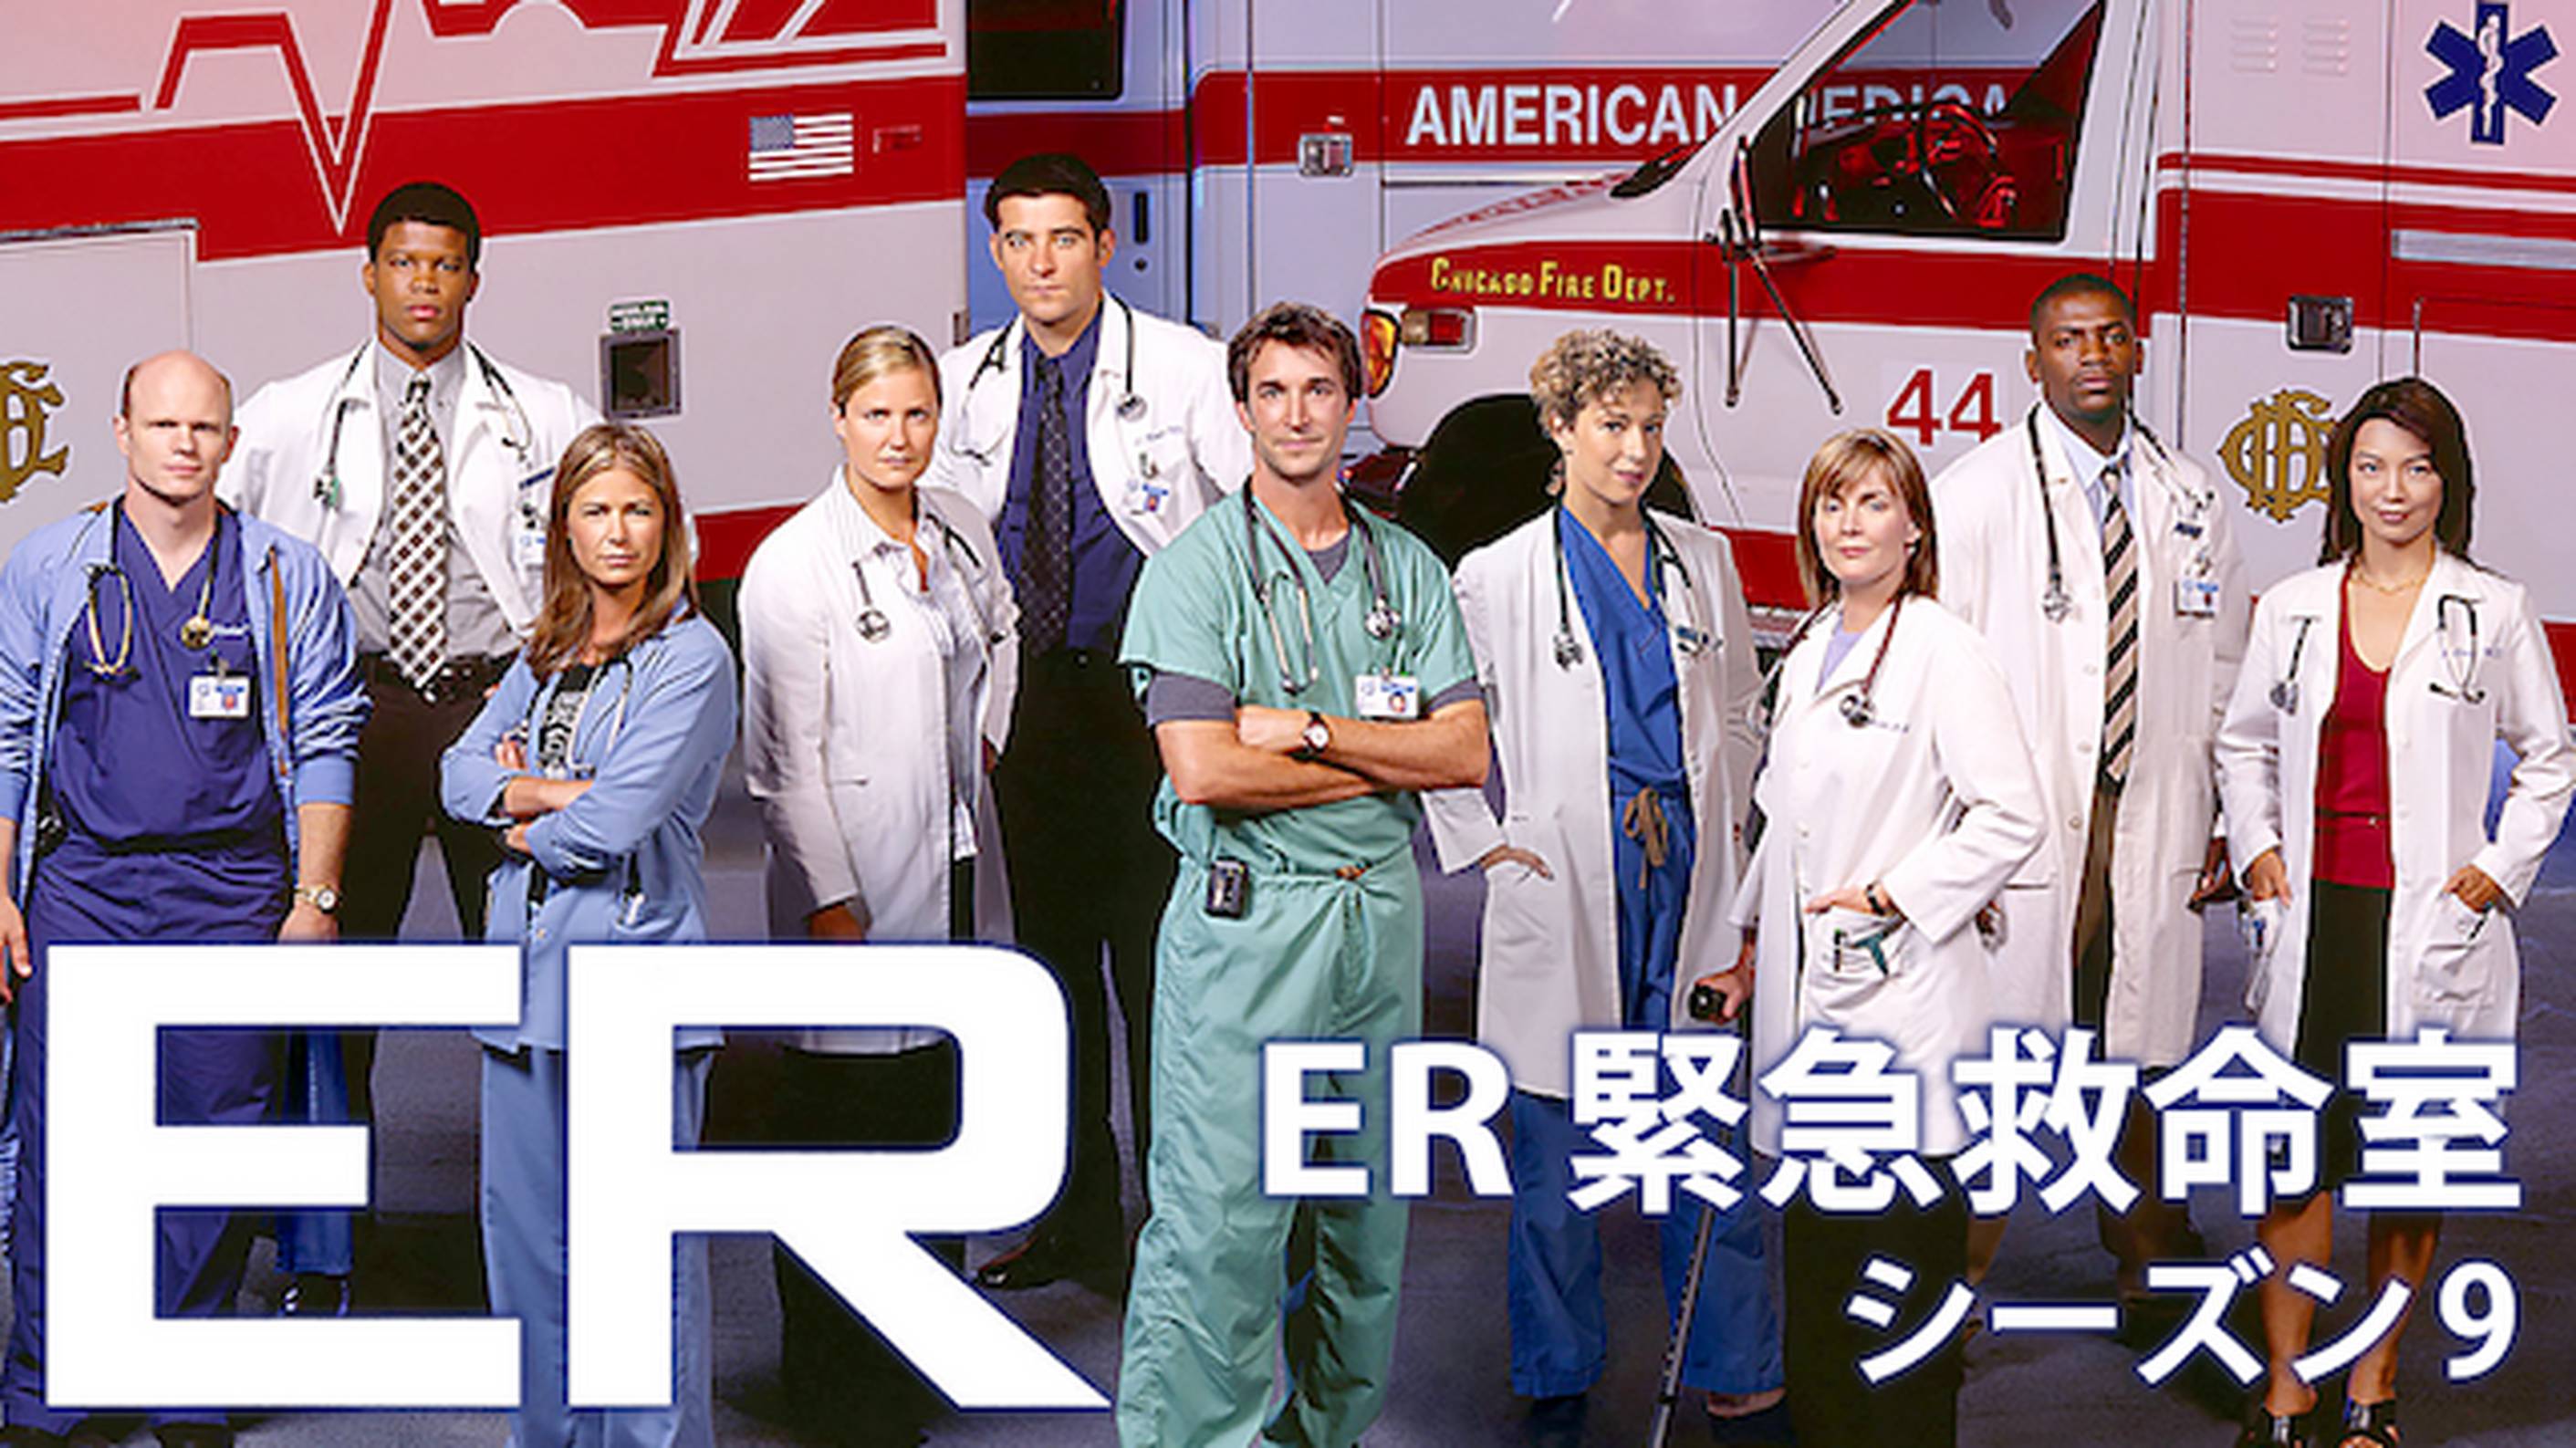 ER 緊急救命室 シーズン9(海外ドラマ / 2002) - 動画配信 | U-NEXT 